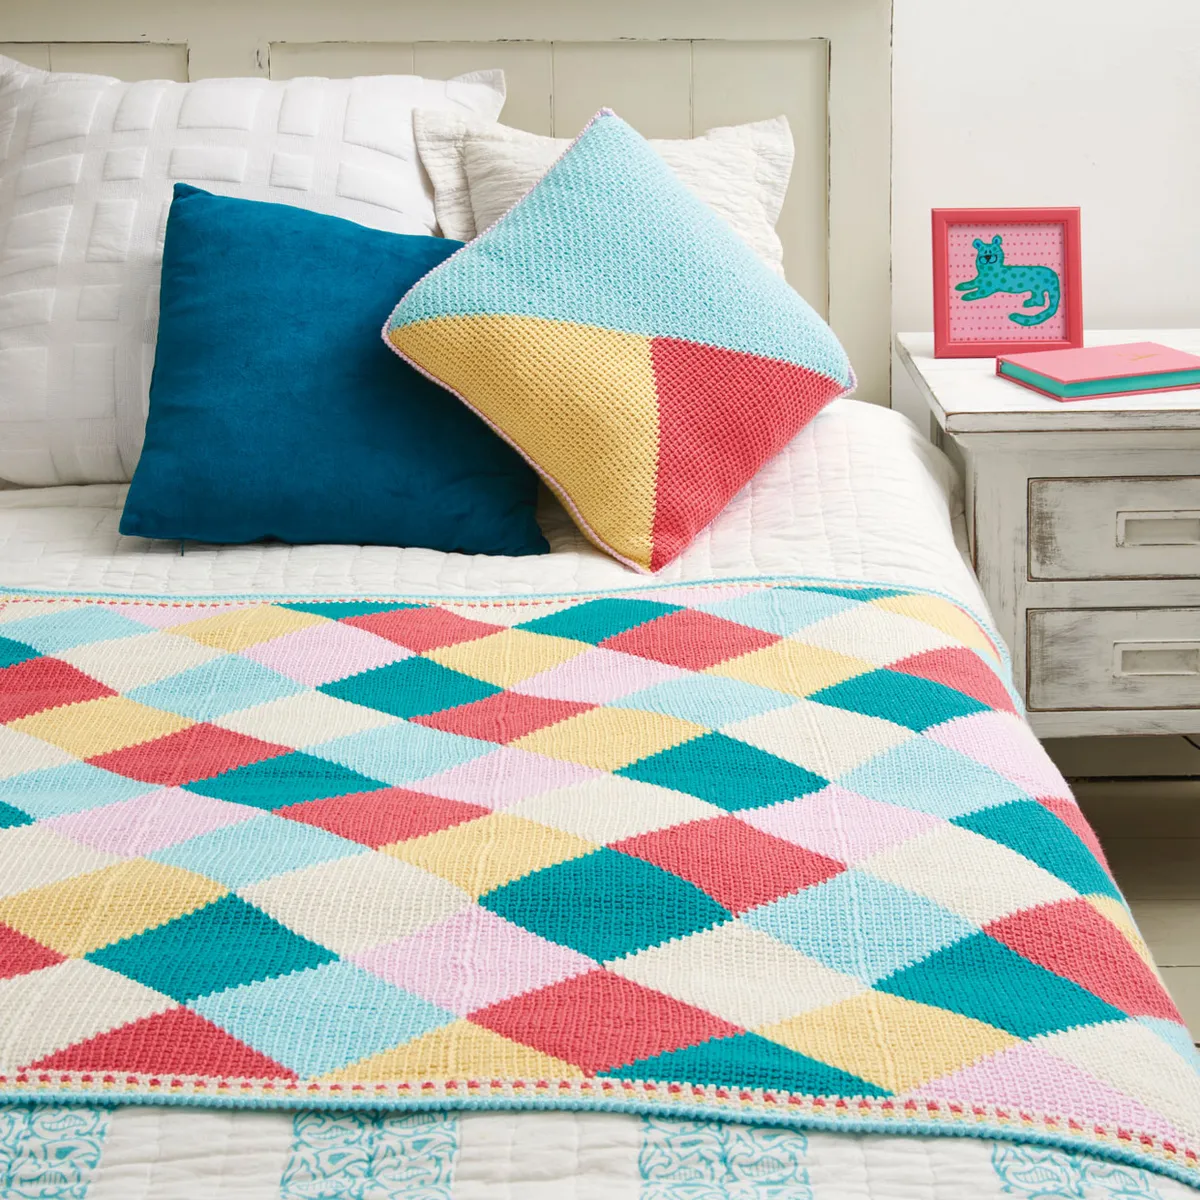 Free-tunisian-crochet-blanket-pattern_square